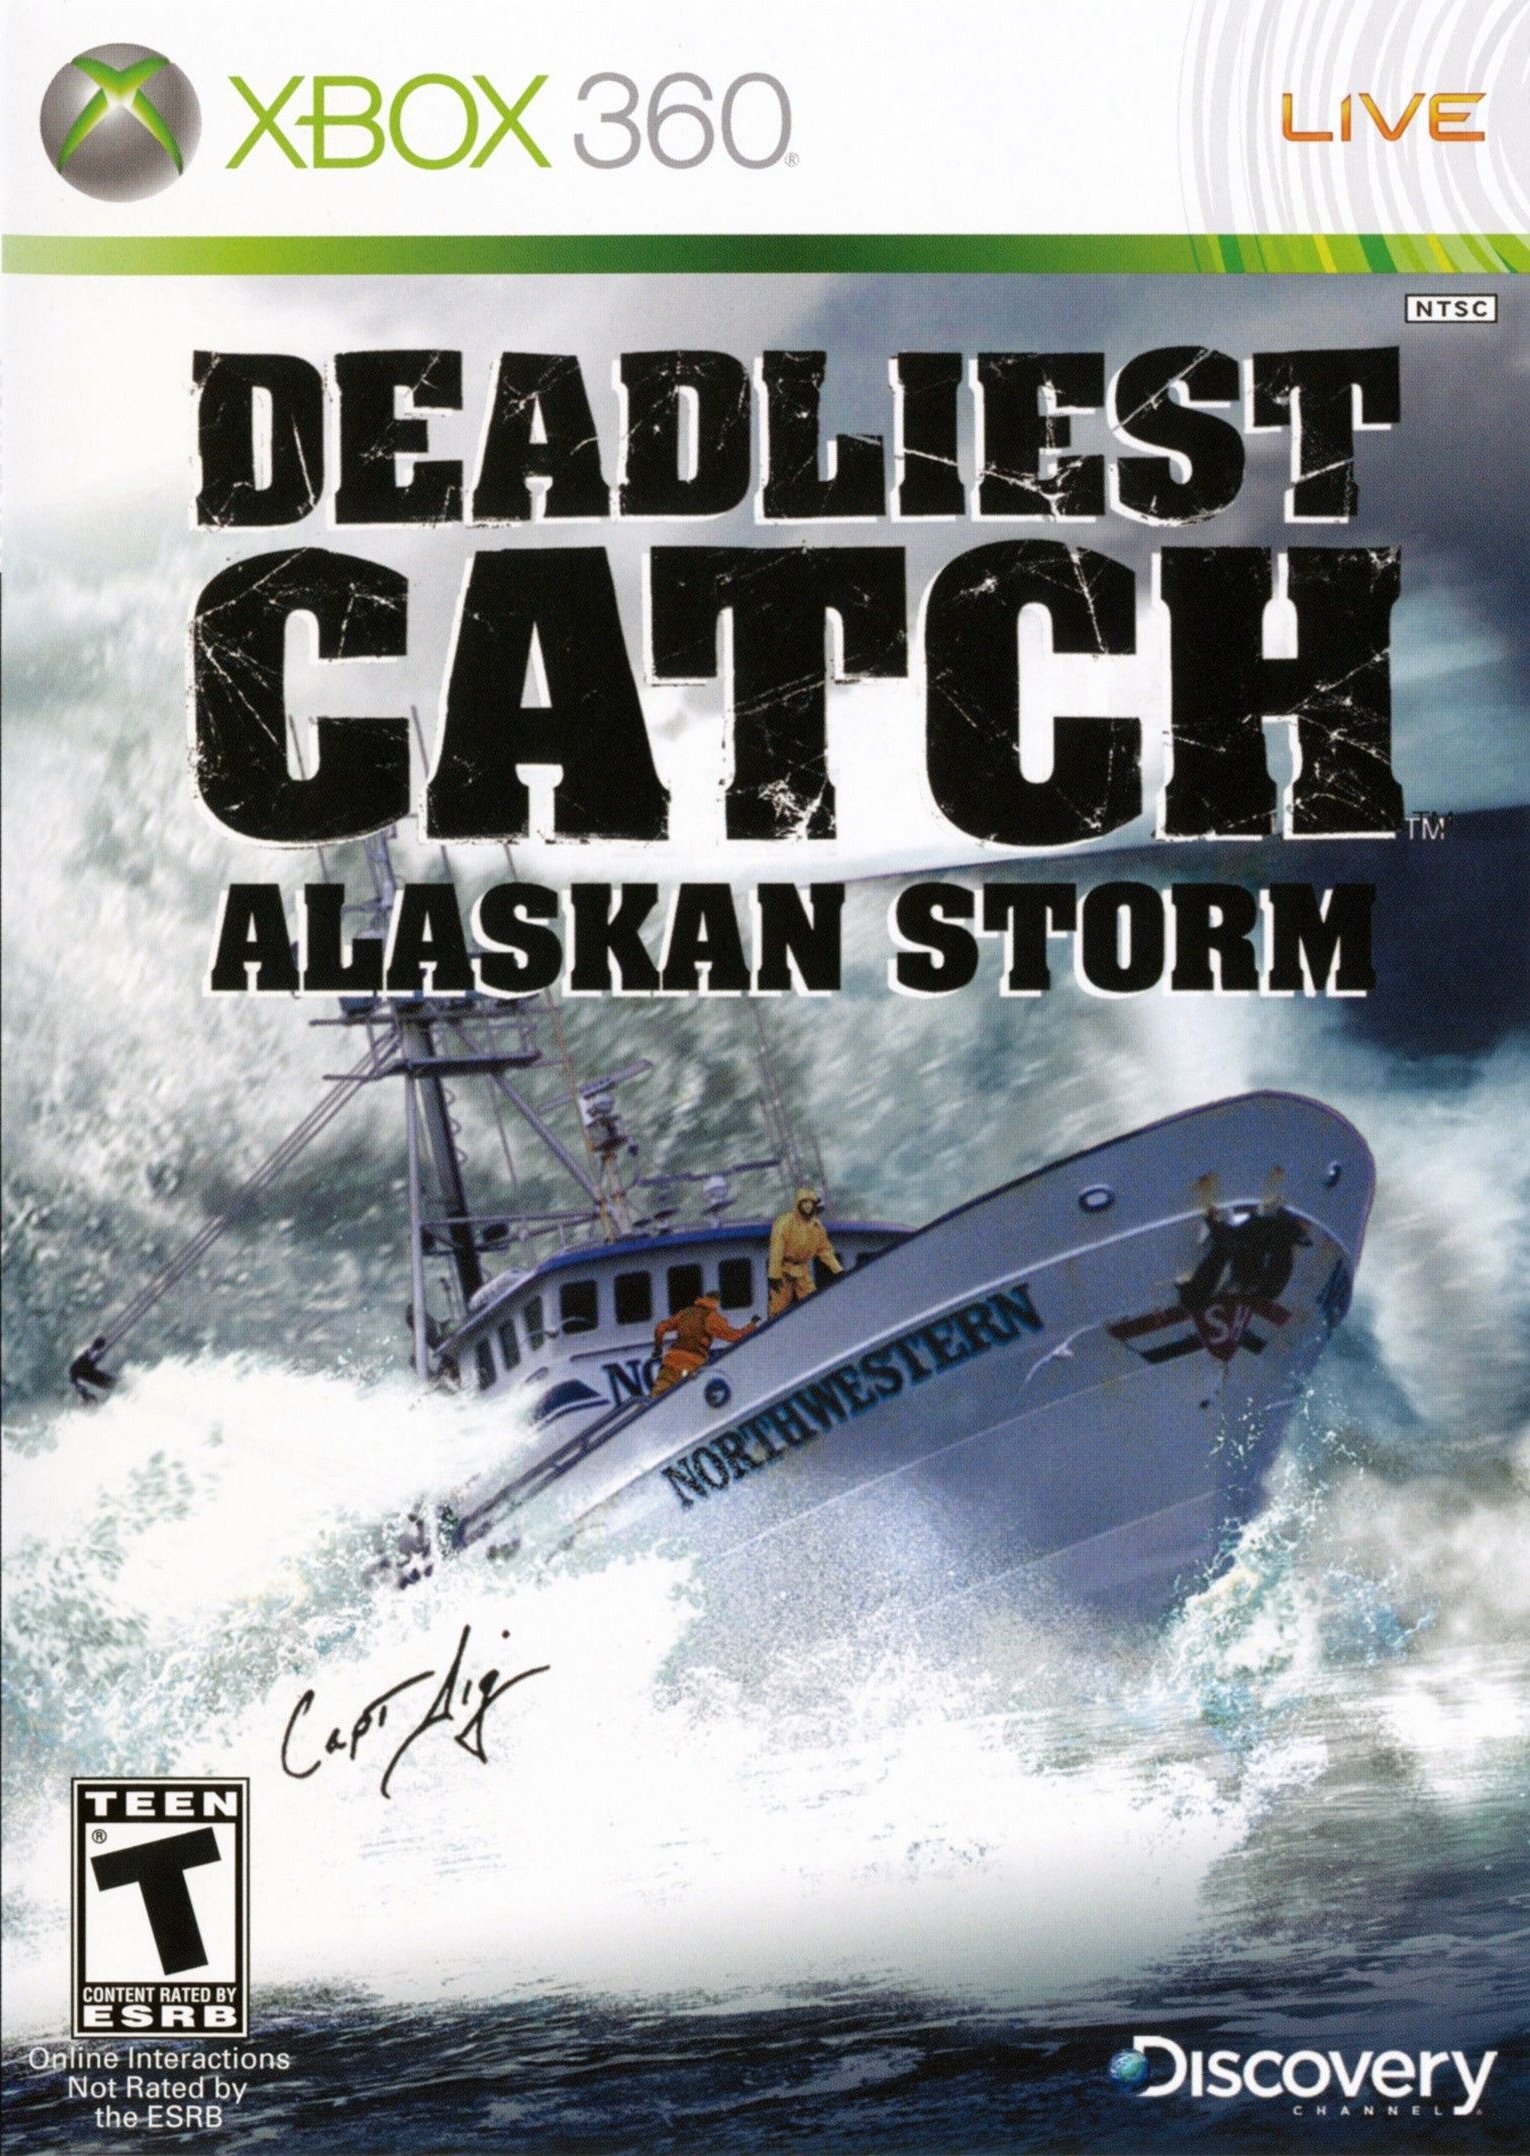 Caratula de Deadliest Catch: Alaskan Storm para Xbox 360